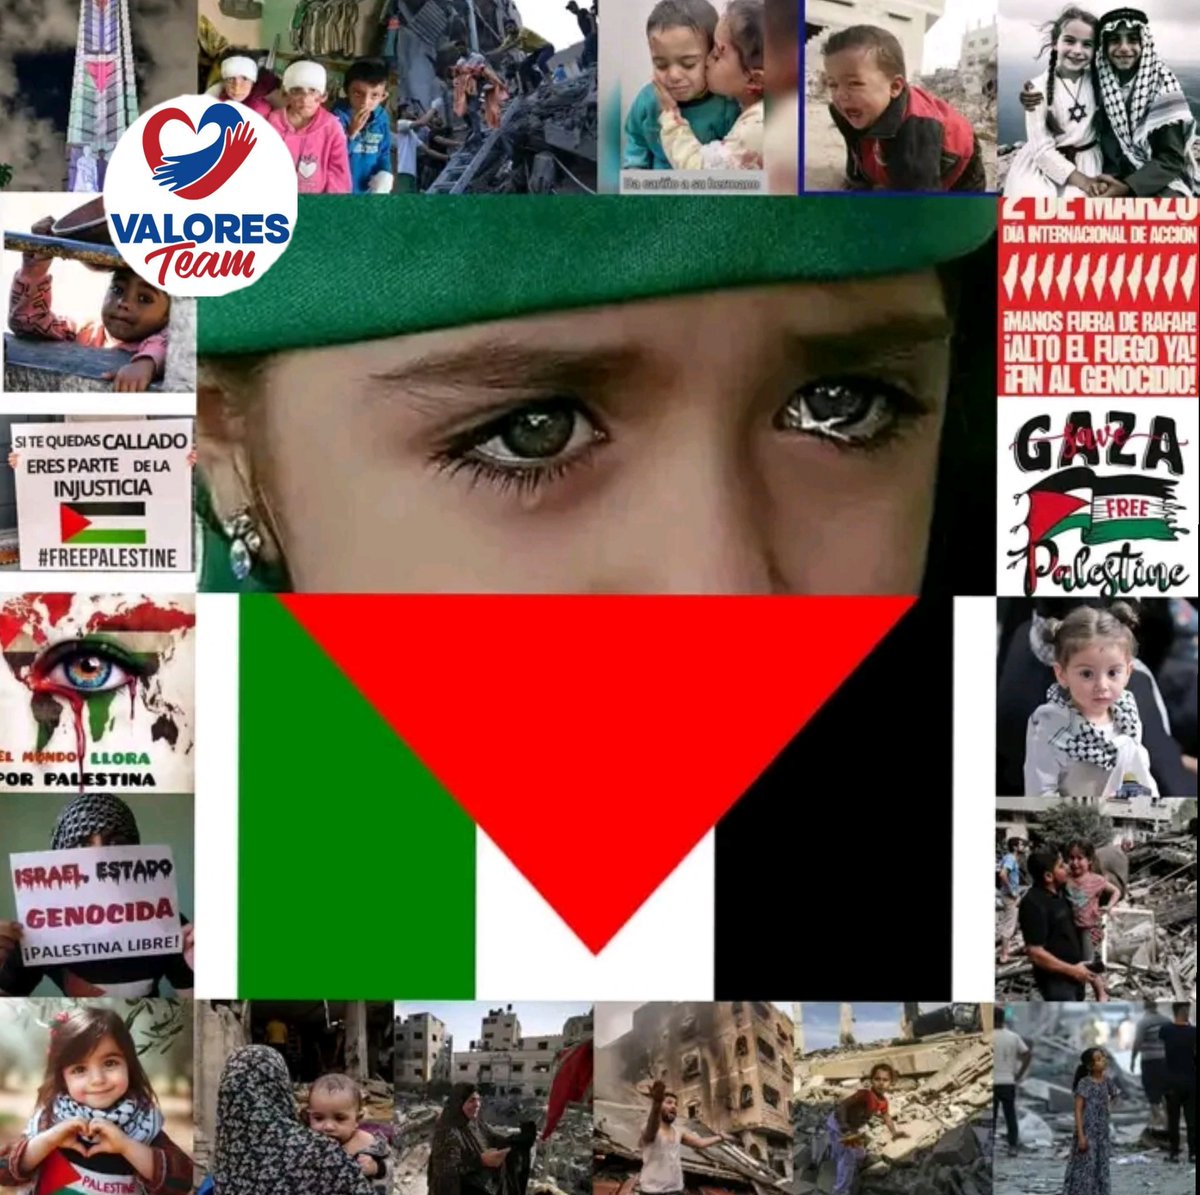 @ValoresTeam1 @cafemartiano @ICuba15 @DefendiendoCuba @mimovilespatria @QbaDCorazon_ @HoyPalestina @LorenaQba1 @VazquezNal97897 @RoselysSandoval @Reylope13 Alcemos nuestras voces porque Palestina 🇦🇪 nos duele. 
#FreePalestine
#ValoresTeam🕊️